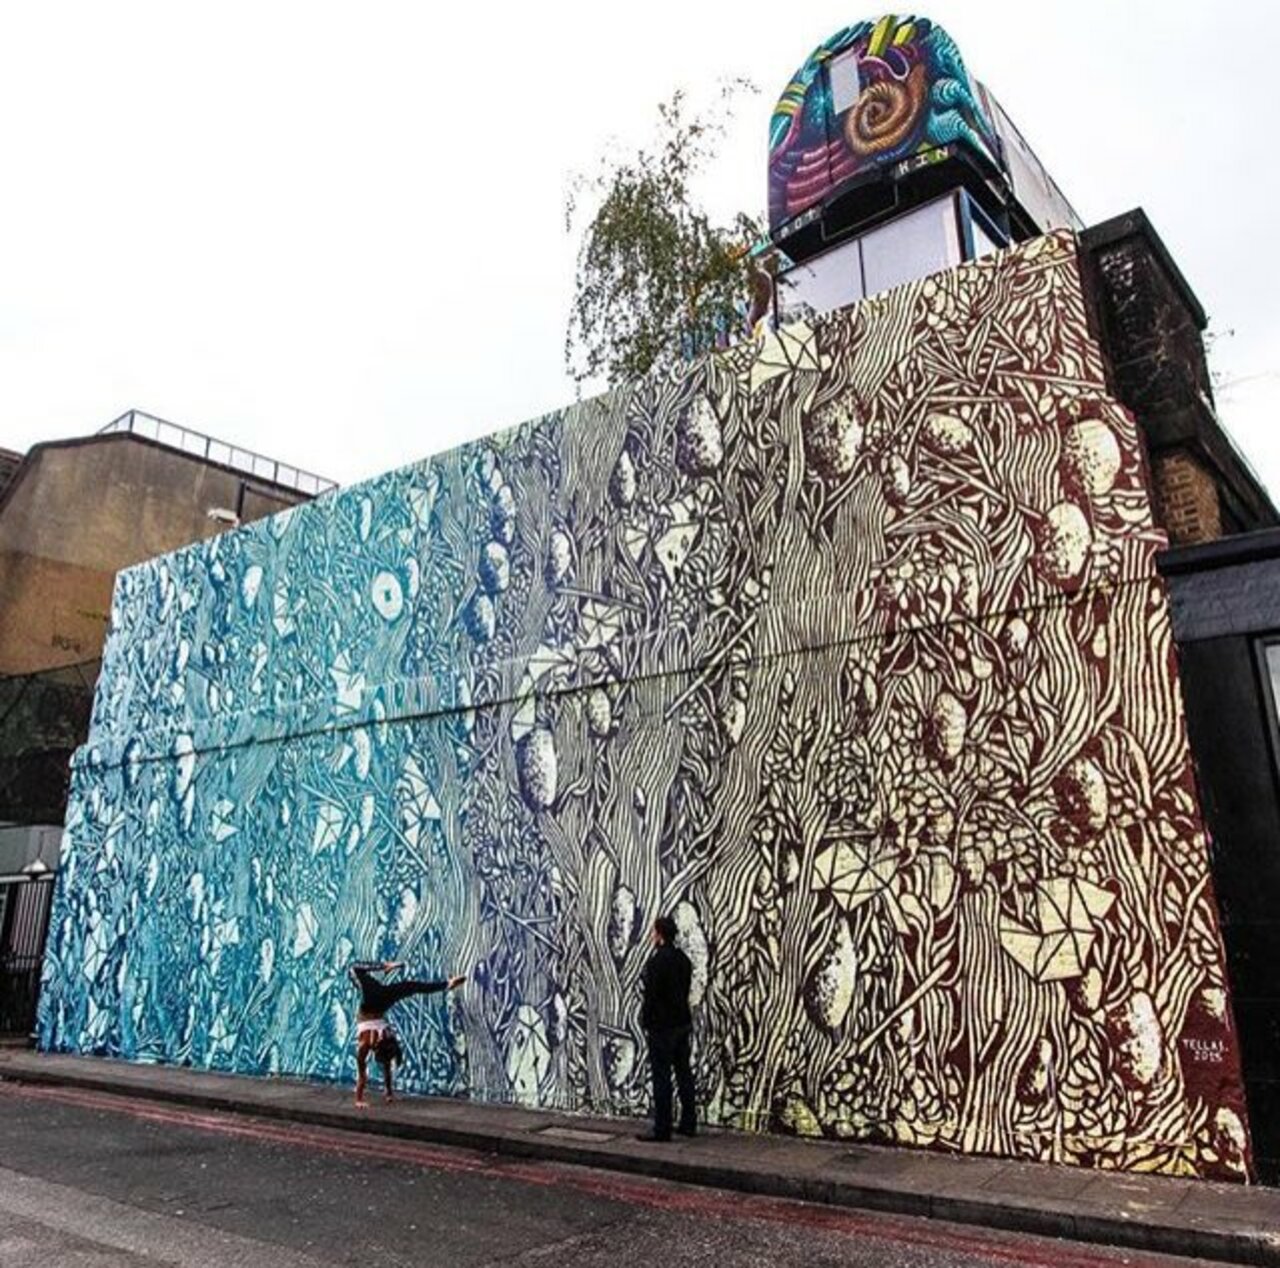 New Street Art by Tellas in Shoreditch London 

#art #graffiti #mural #streetart https://t.co/EQFE6RMNRo